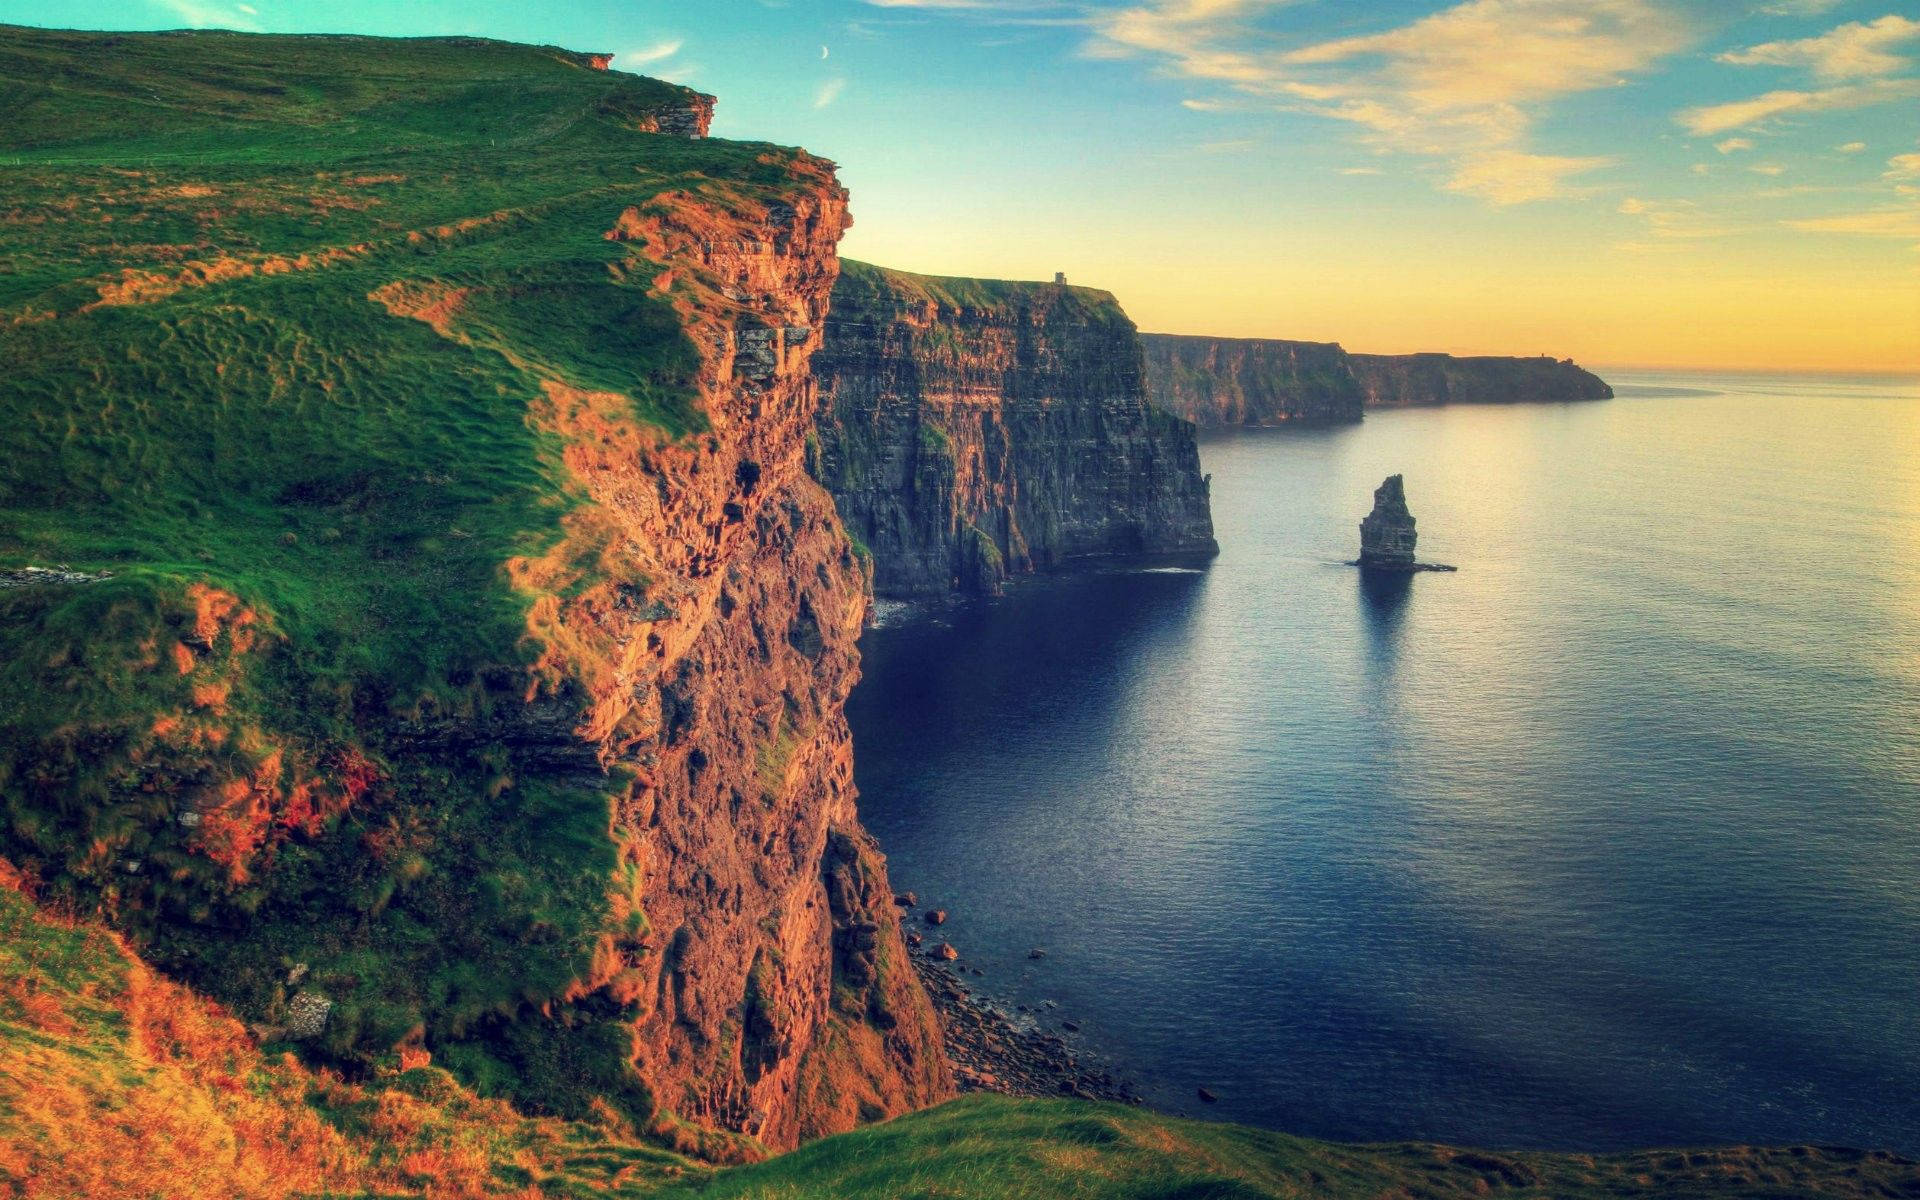 Scenic Cliffs Of Moher Ireland